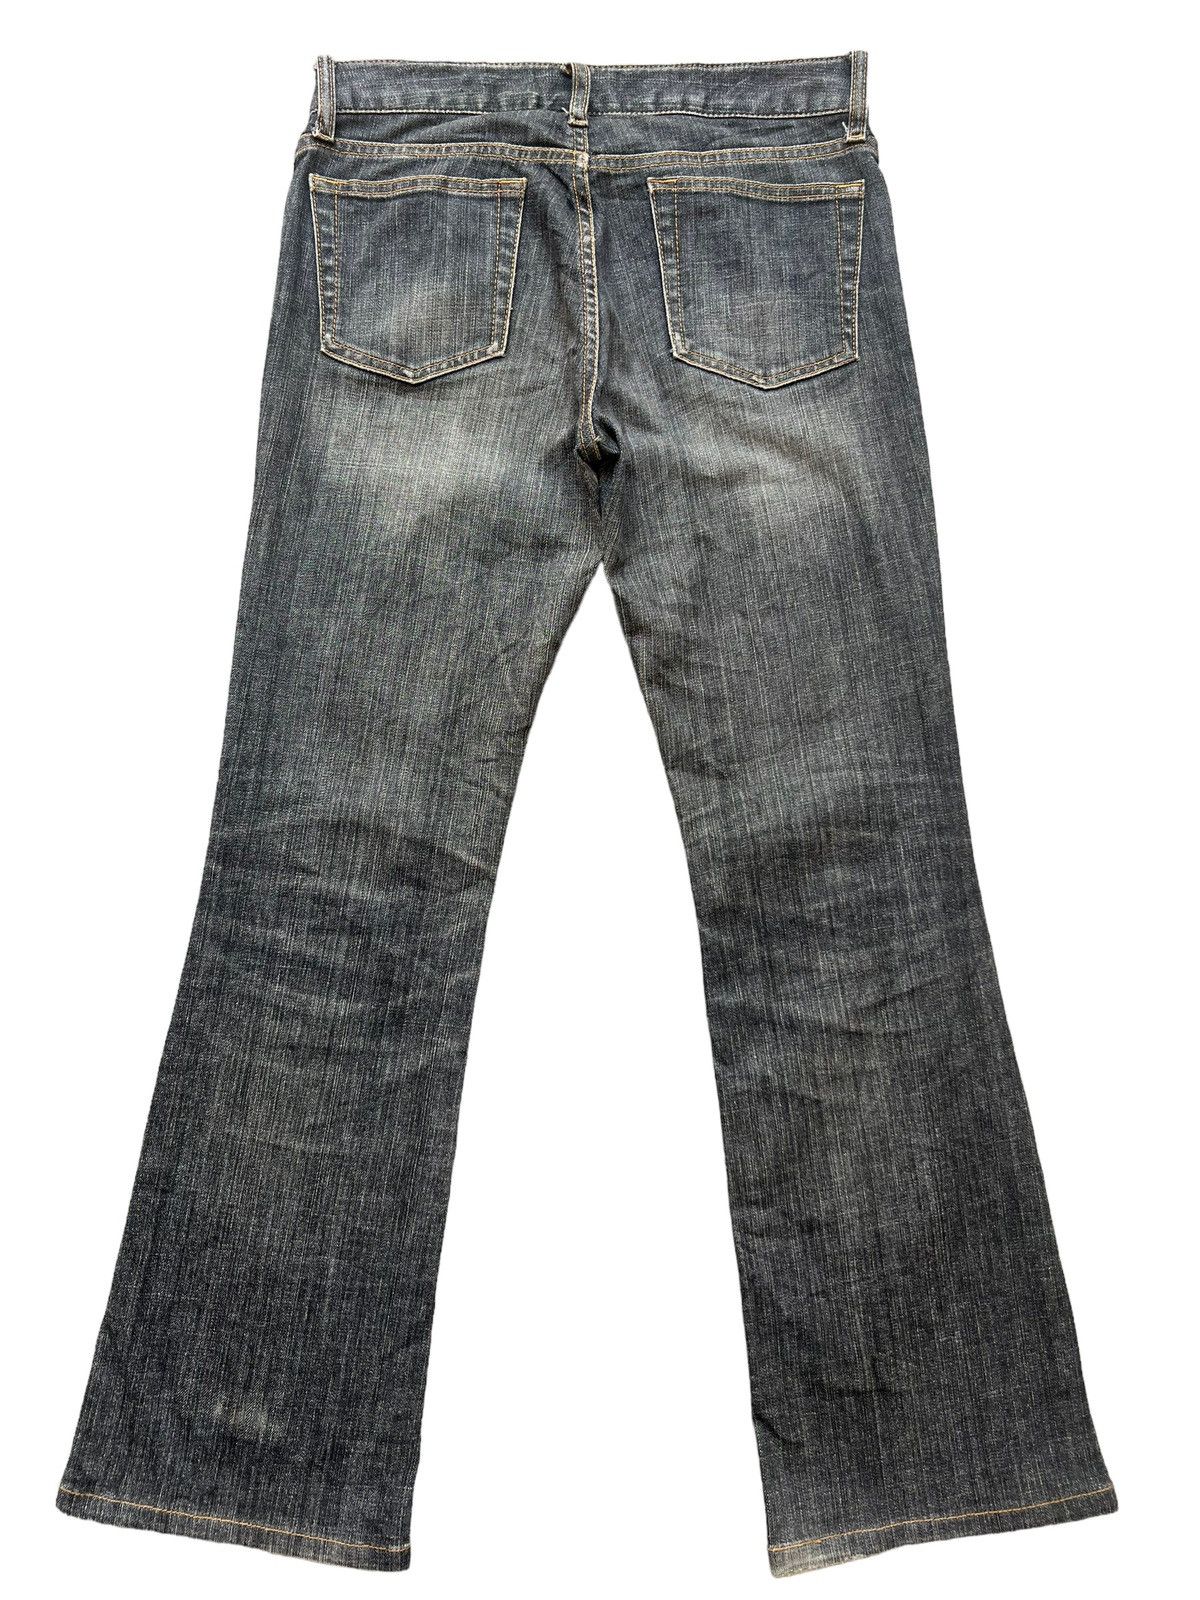 Uniqlo Black Low Rise Bootcut Flare Denim Jeans 30x29 - 3